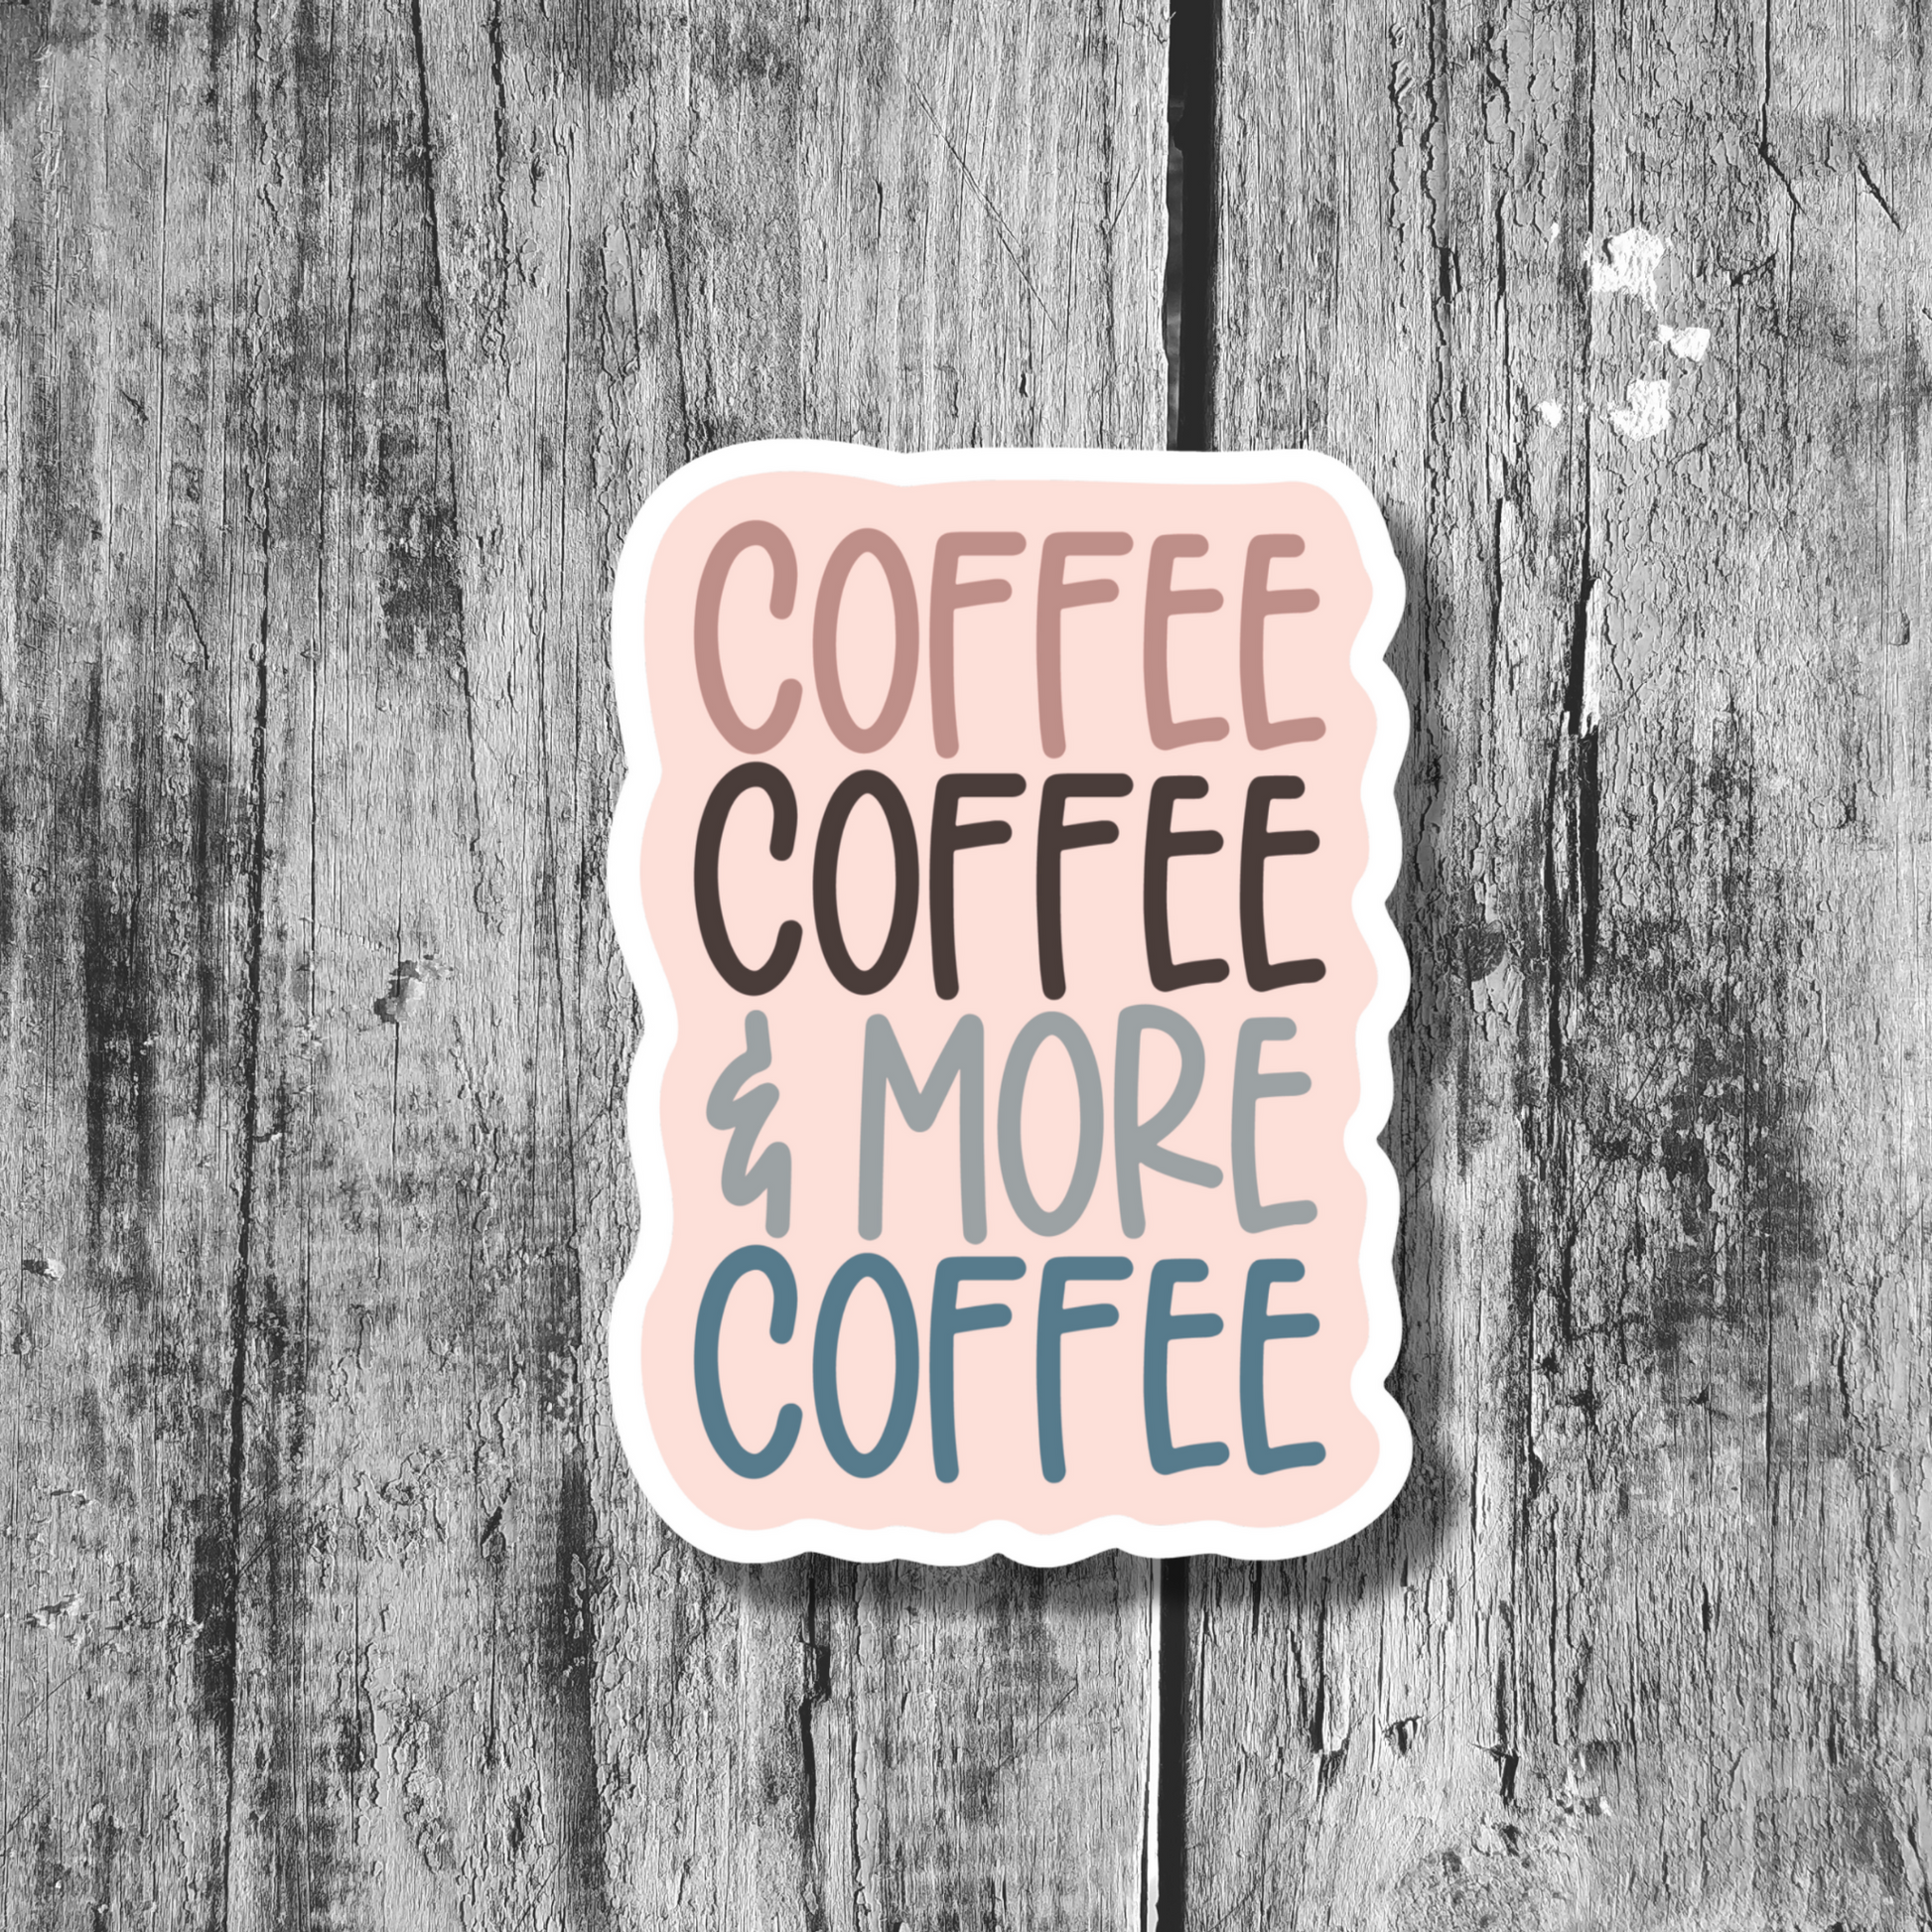 Coffee, Coffee, and More Coffee Sticker- Kindle Sticker, Water Bottle Sticker, Coffee Cup Sticker - Brandi Renee Studio